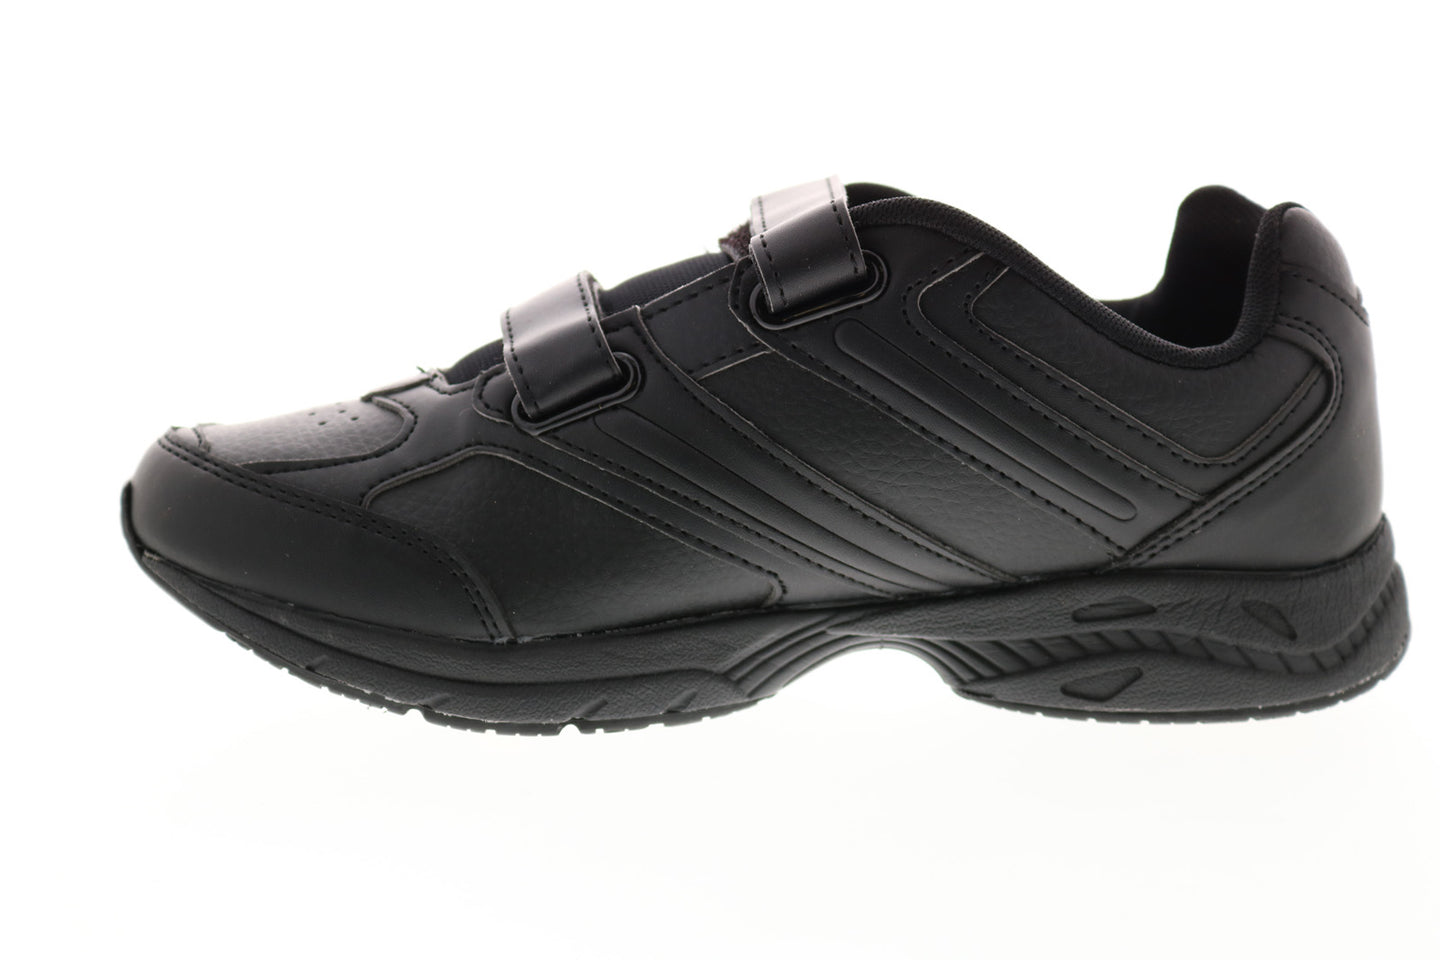 Avia A344WBSY Womens Black Wide 2E Leather Low Top Athletic Walking Sh ...